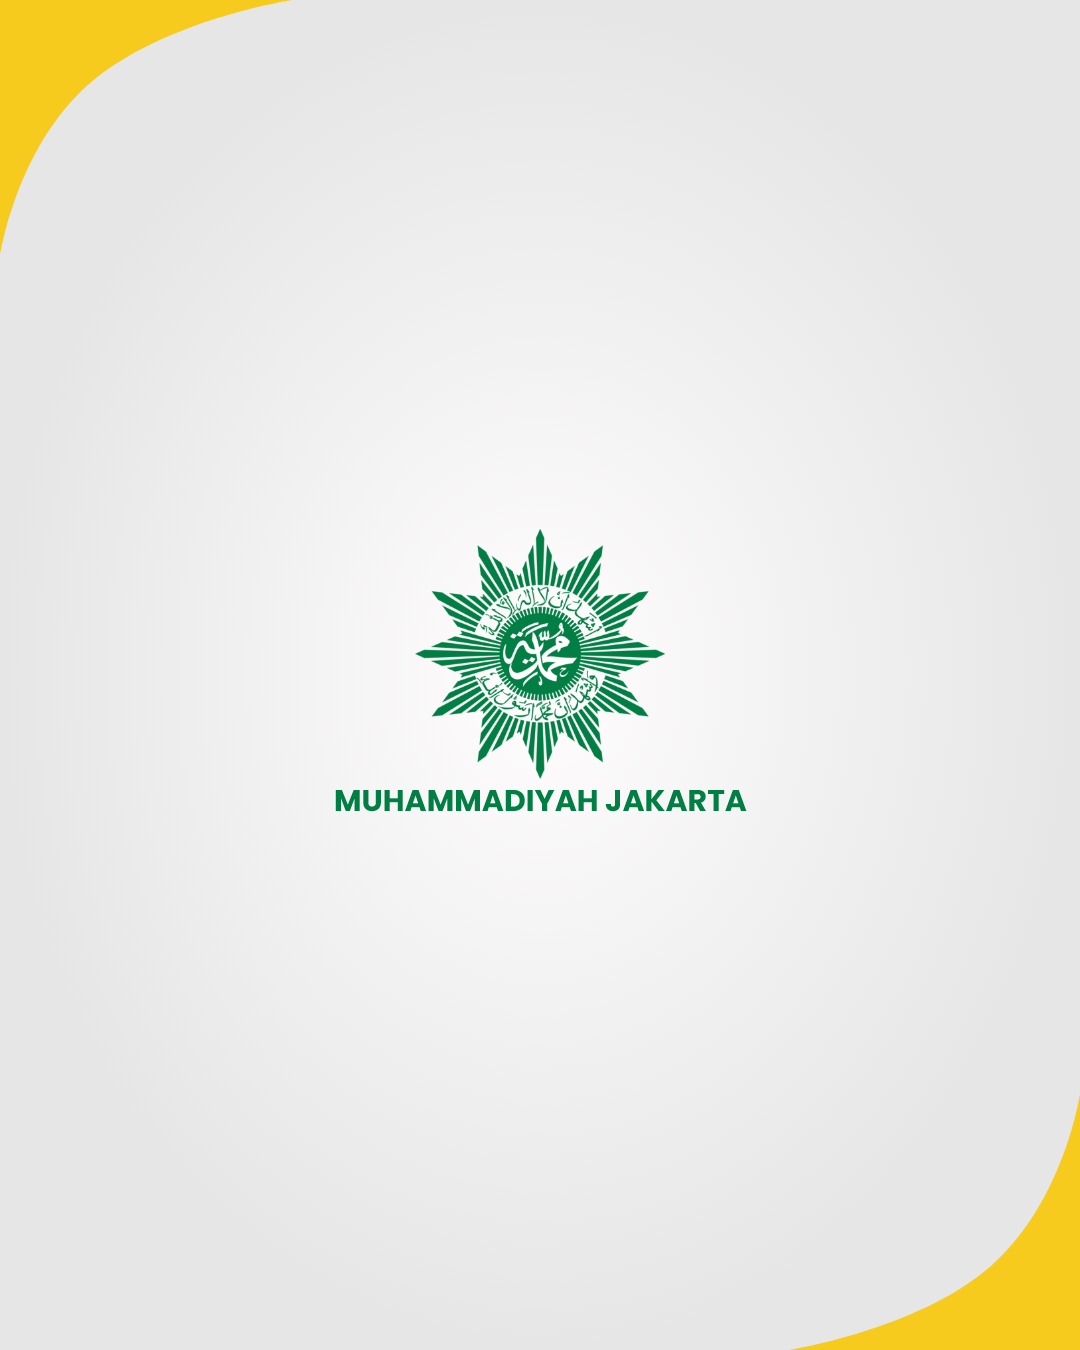 Berita Muhammadiyah Disaster Management Center (MDMC)